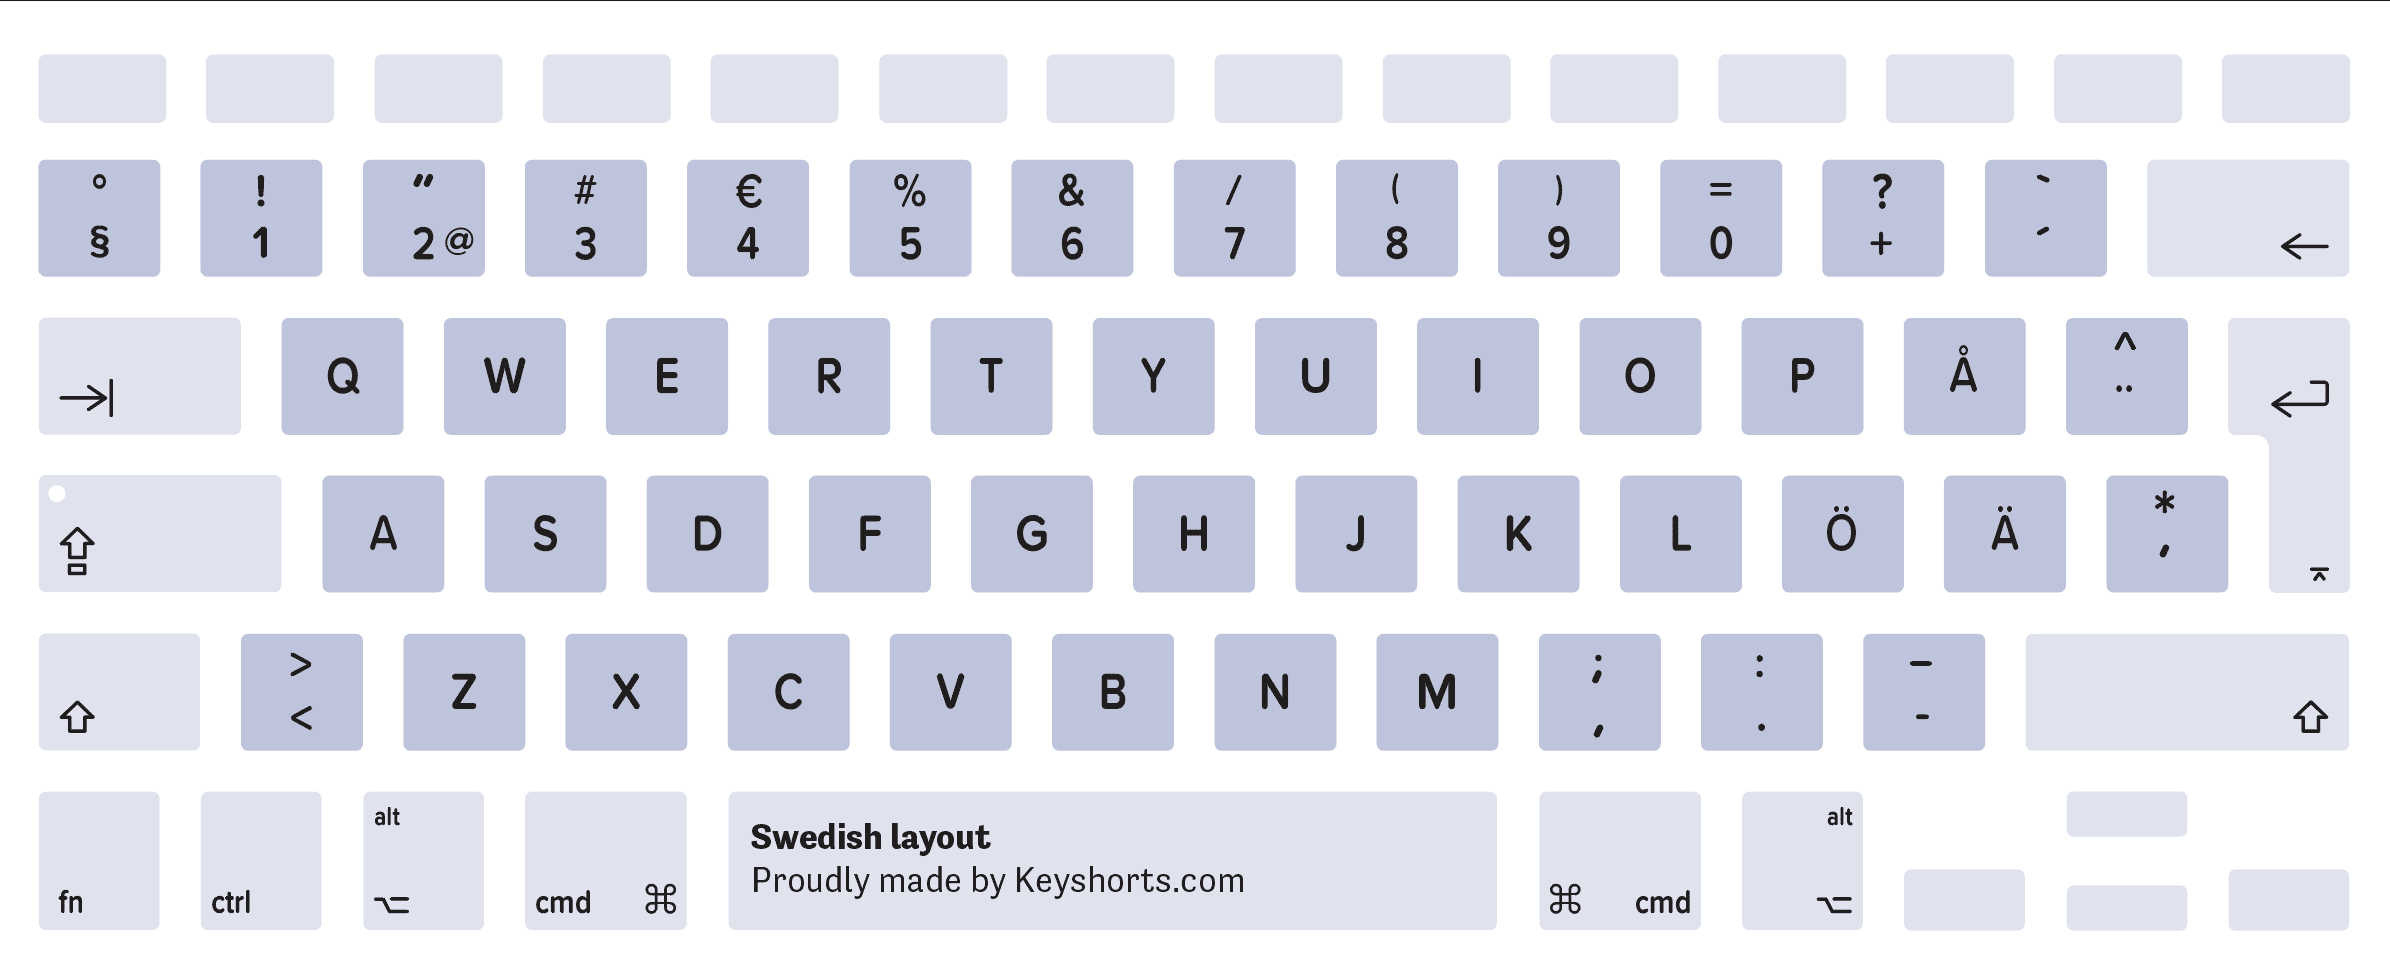 macbook air french keyboard layout